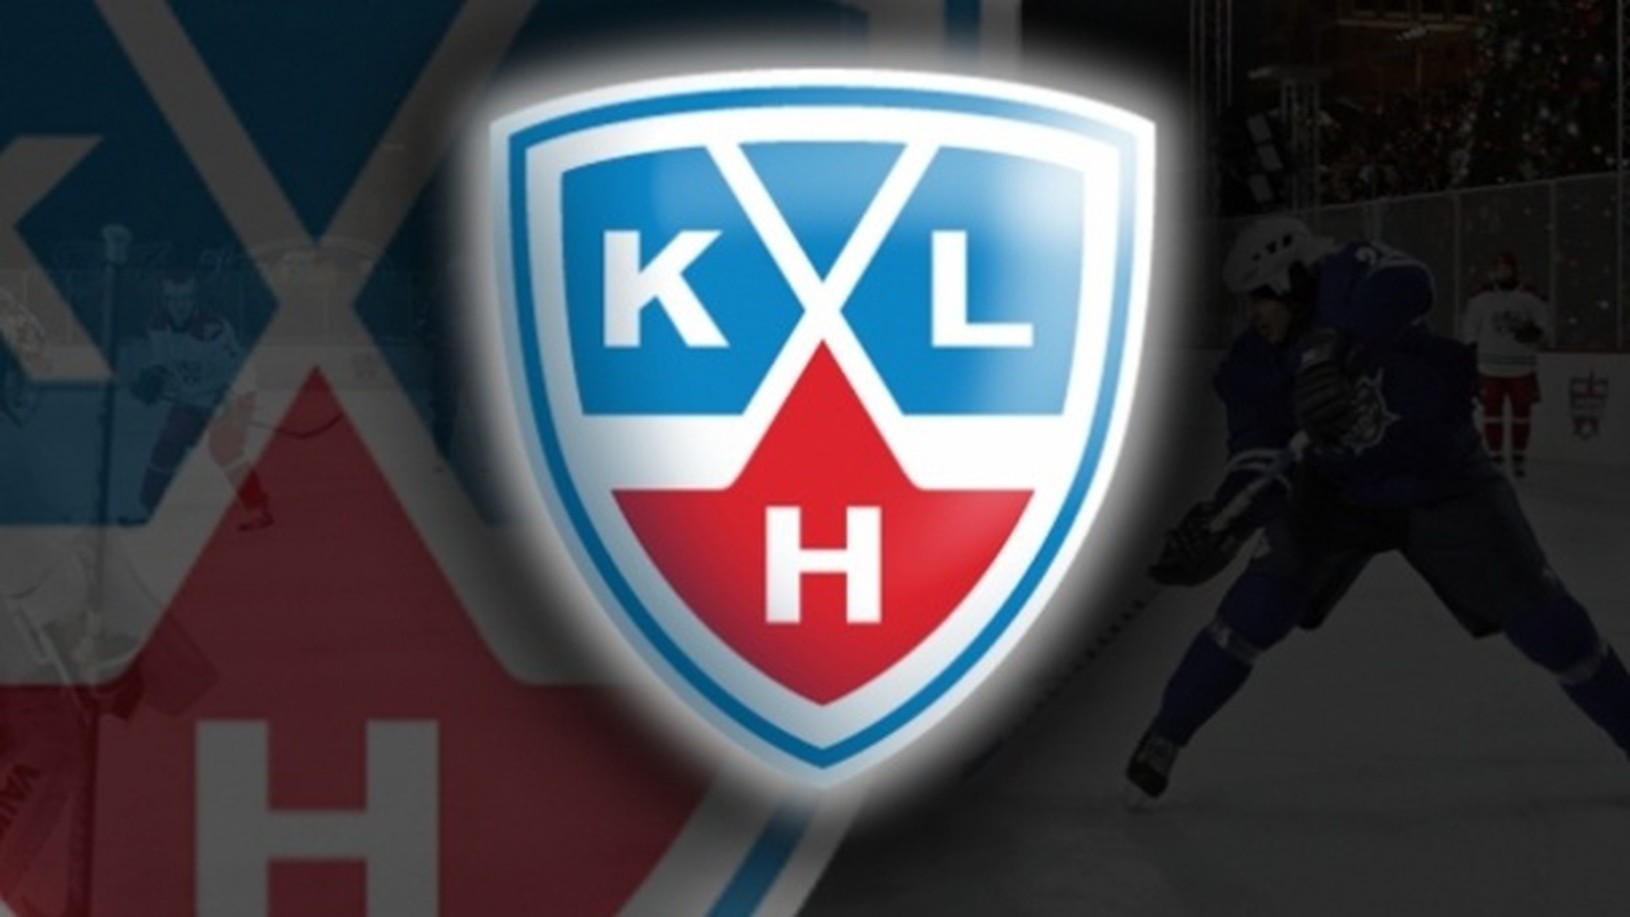 Logo KHL